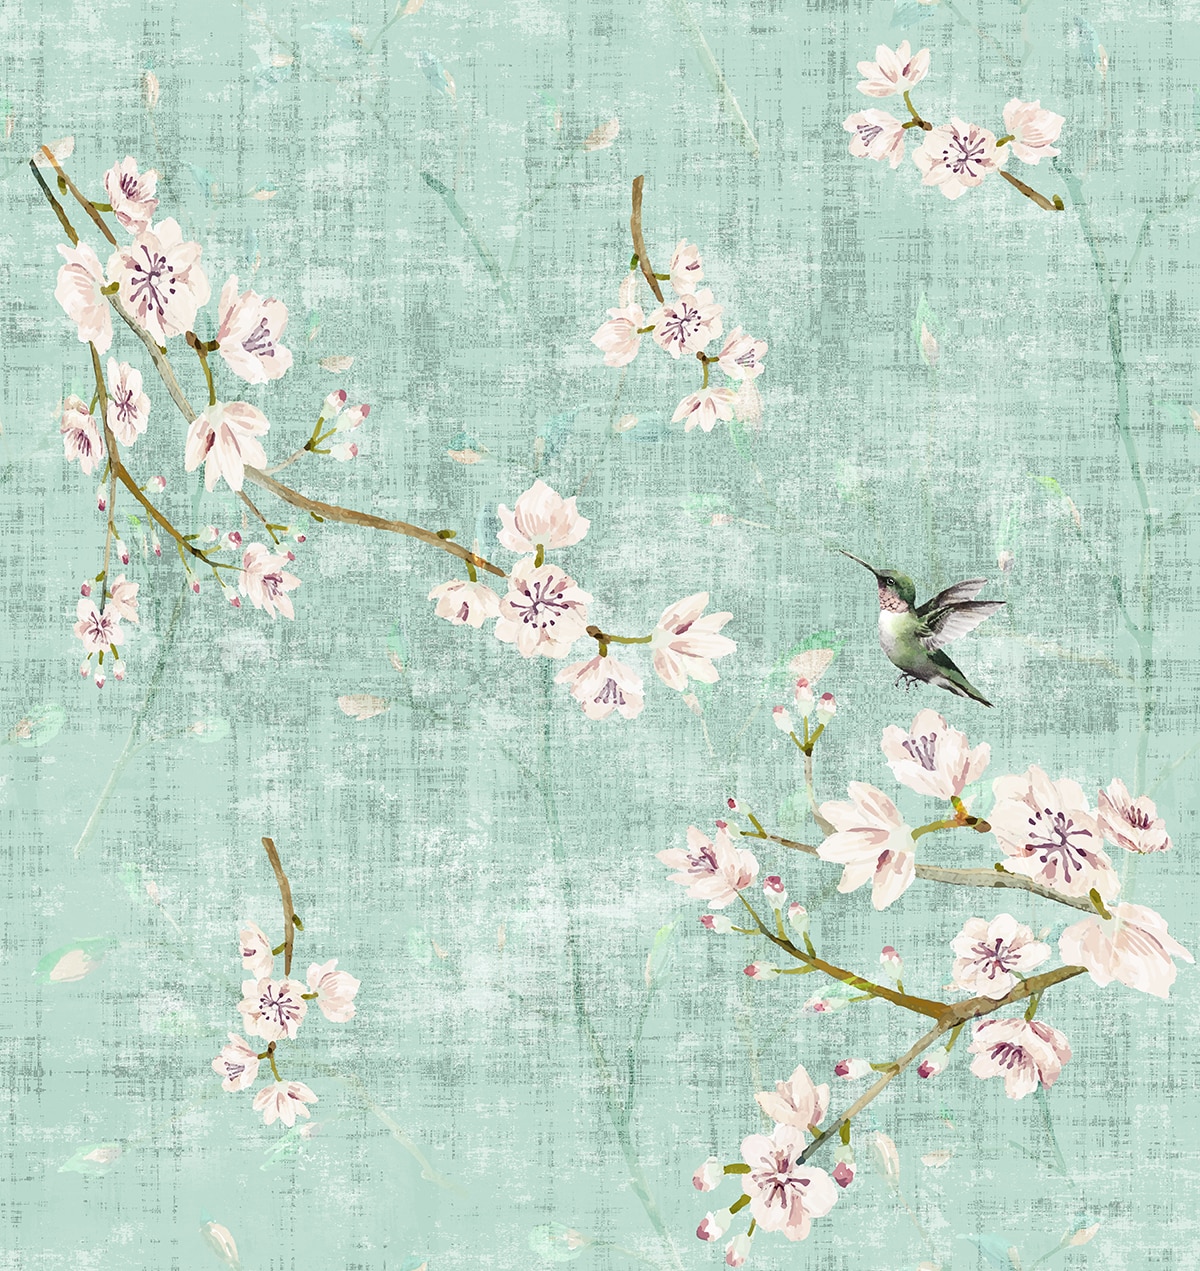 Blossom Fantasia Laduree Wallpaper Per Yard The Nicolette Mayer